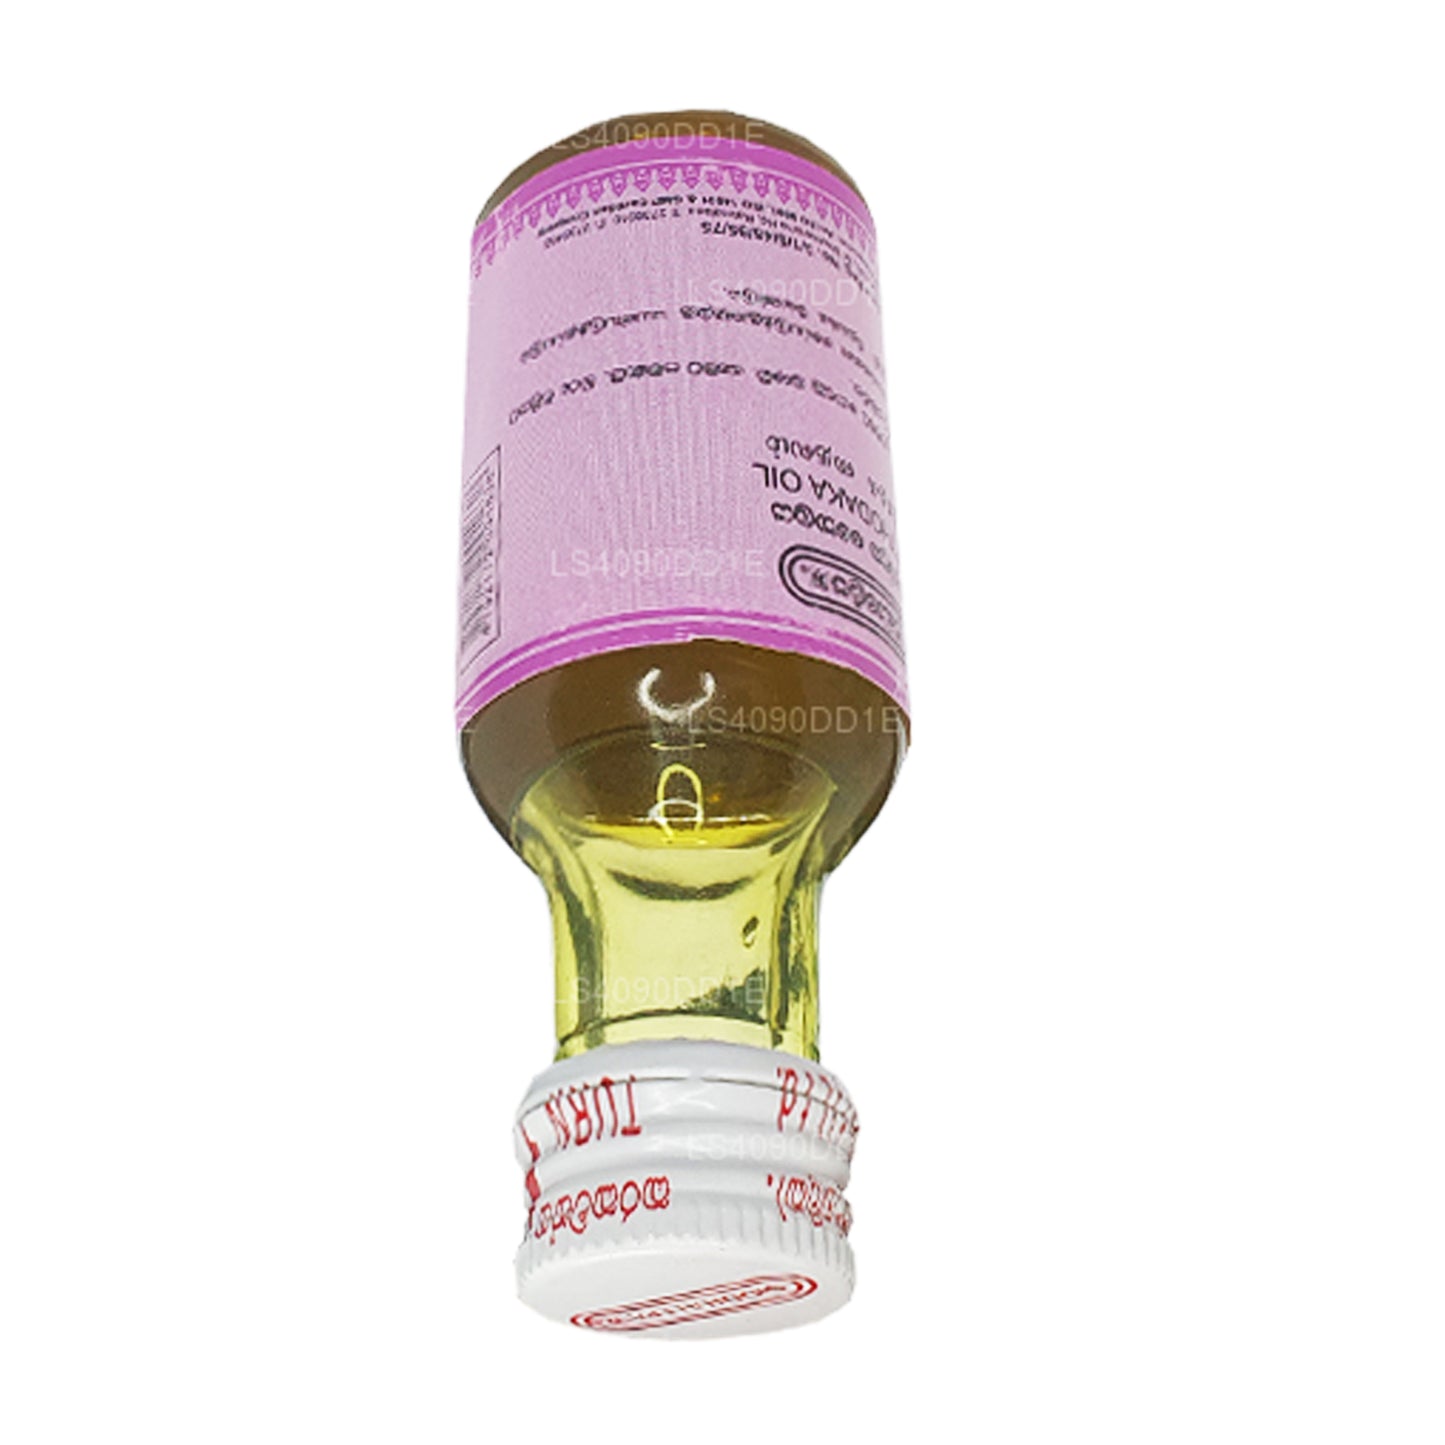 Siddhalepa Seethodaka Öl (30 ml)